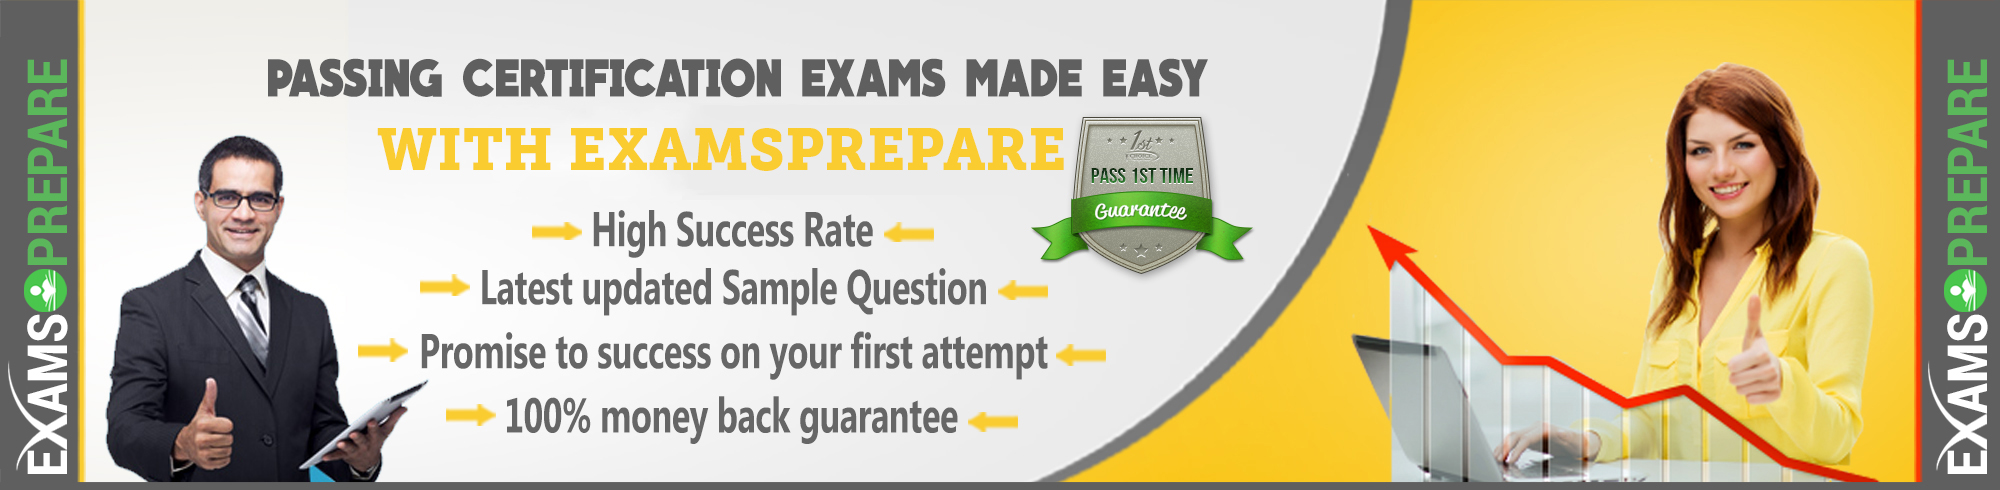 9A0-137 Exam BrainDumps - Pass 9A0-137 Exam Easily Guaranteed